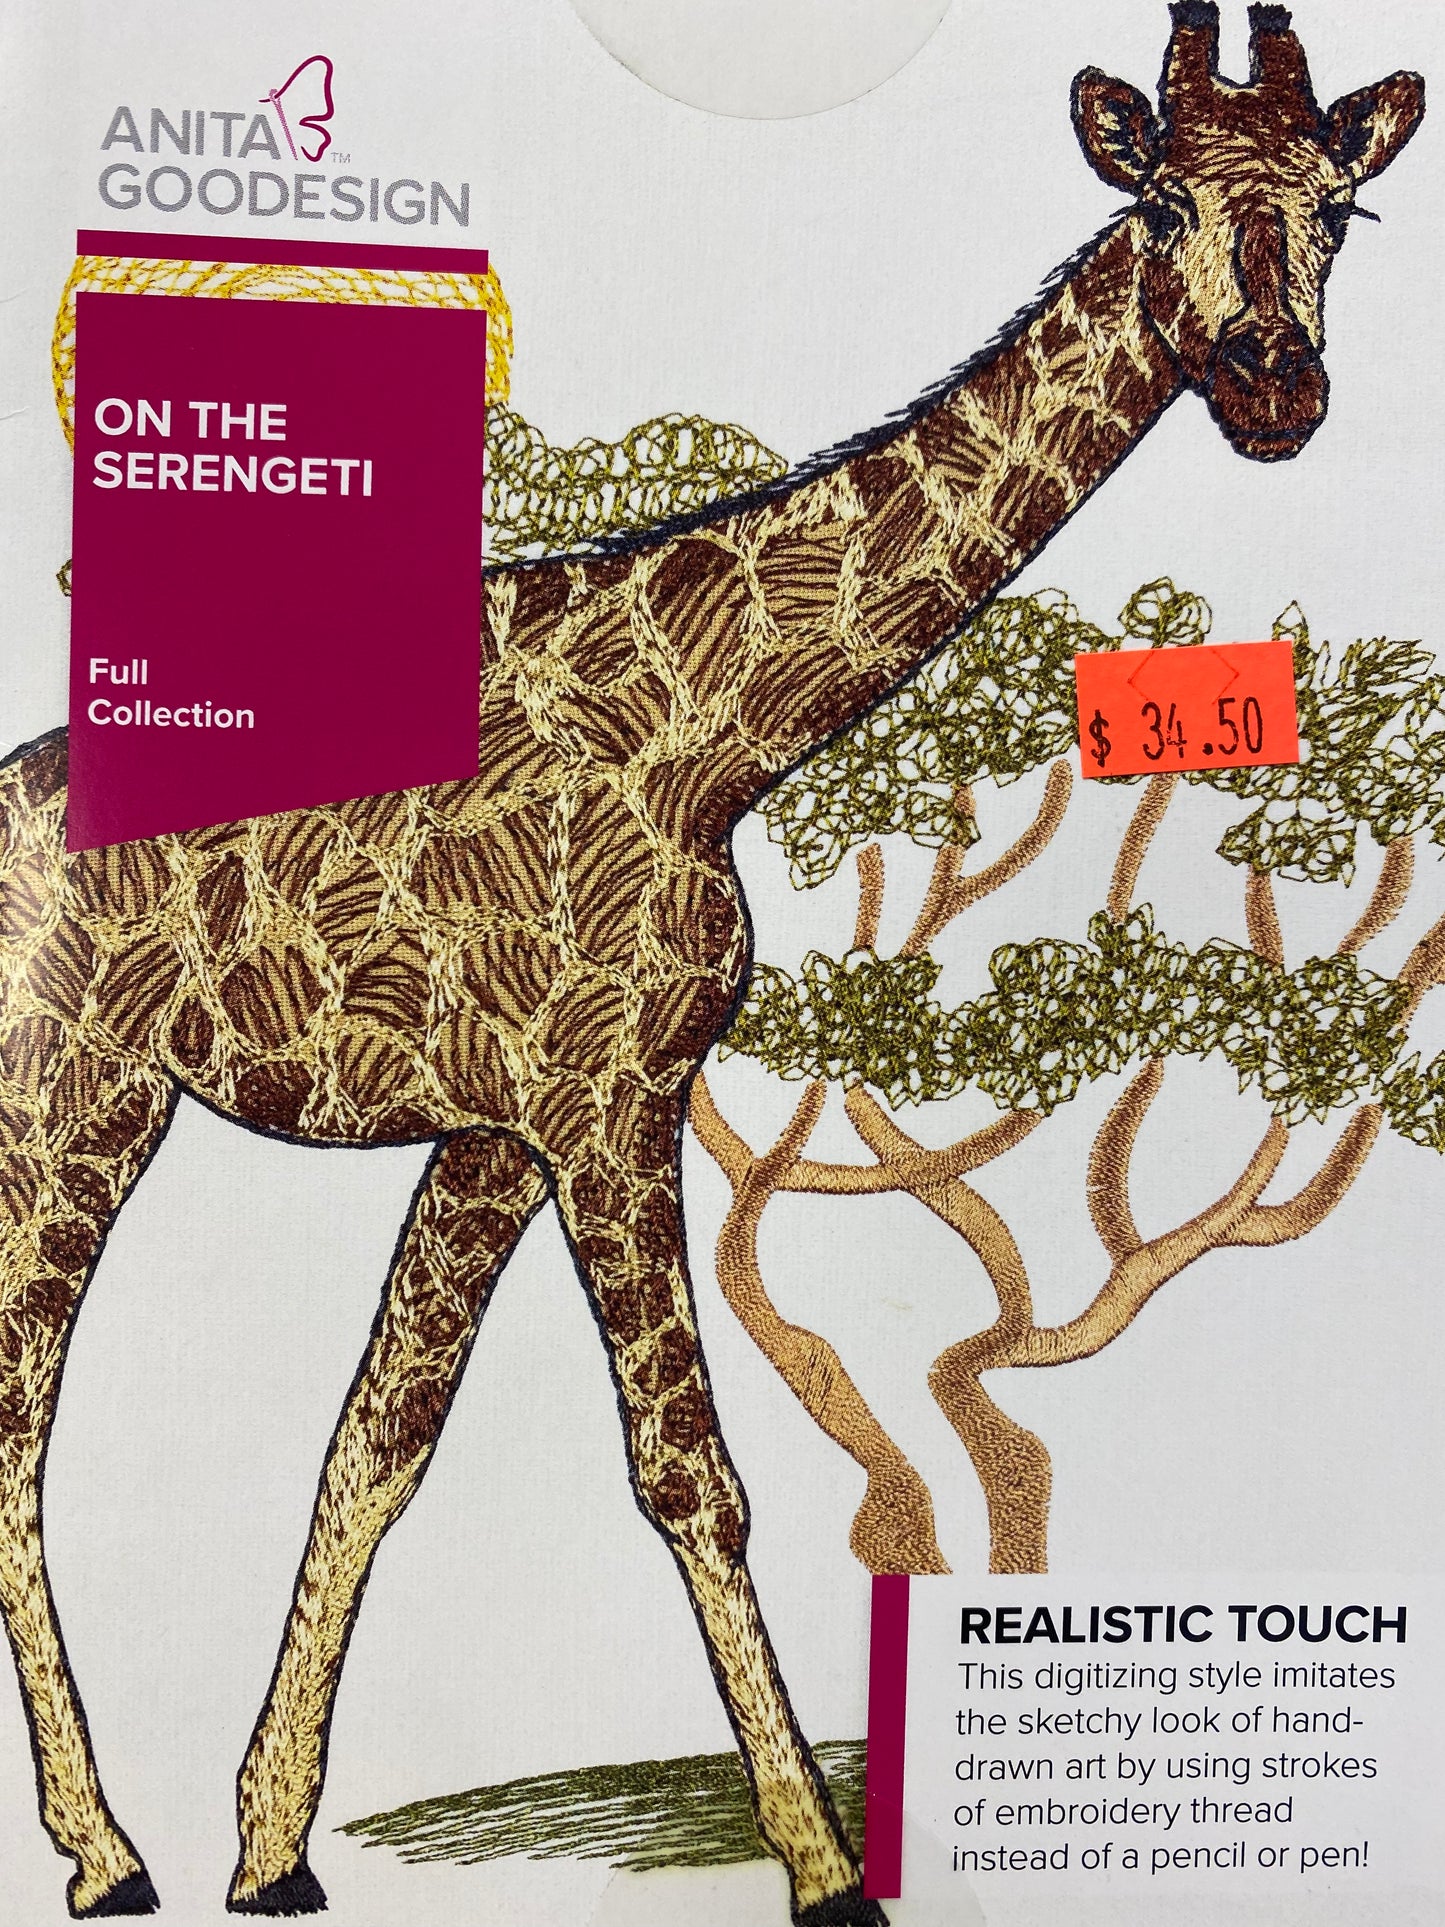 On the Serengeti by Anita Goodesign